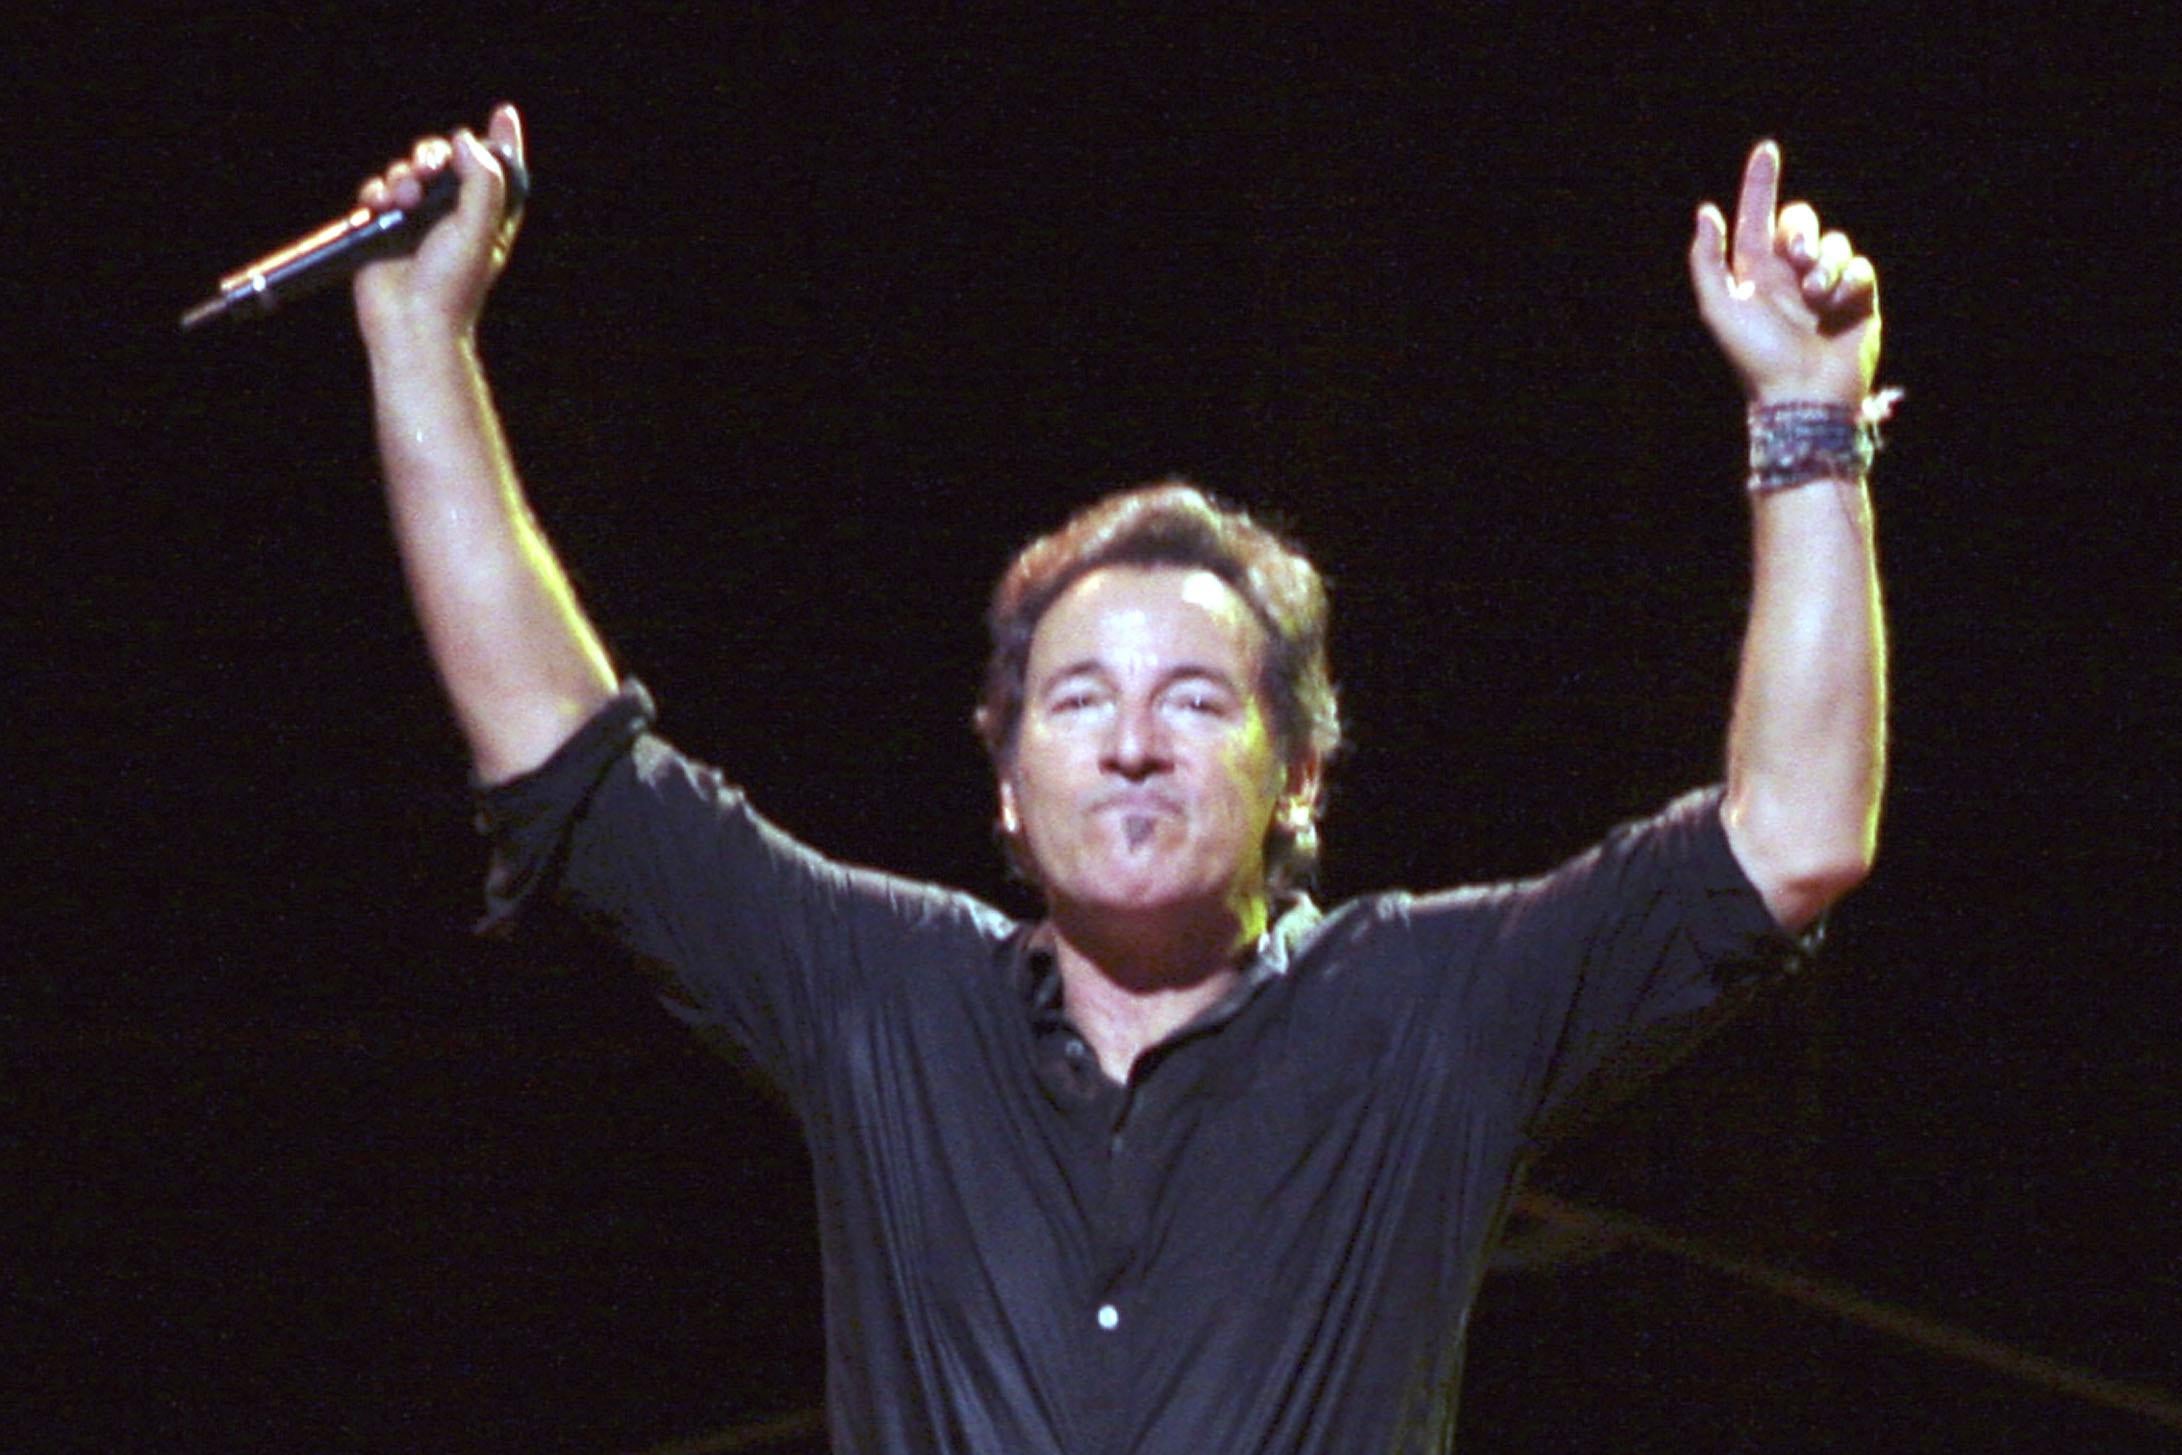 Bruce Springsteen onstage.